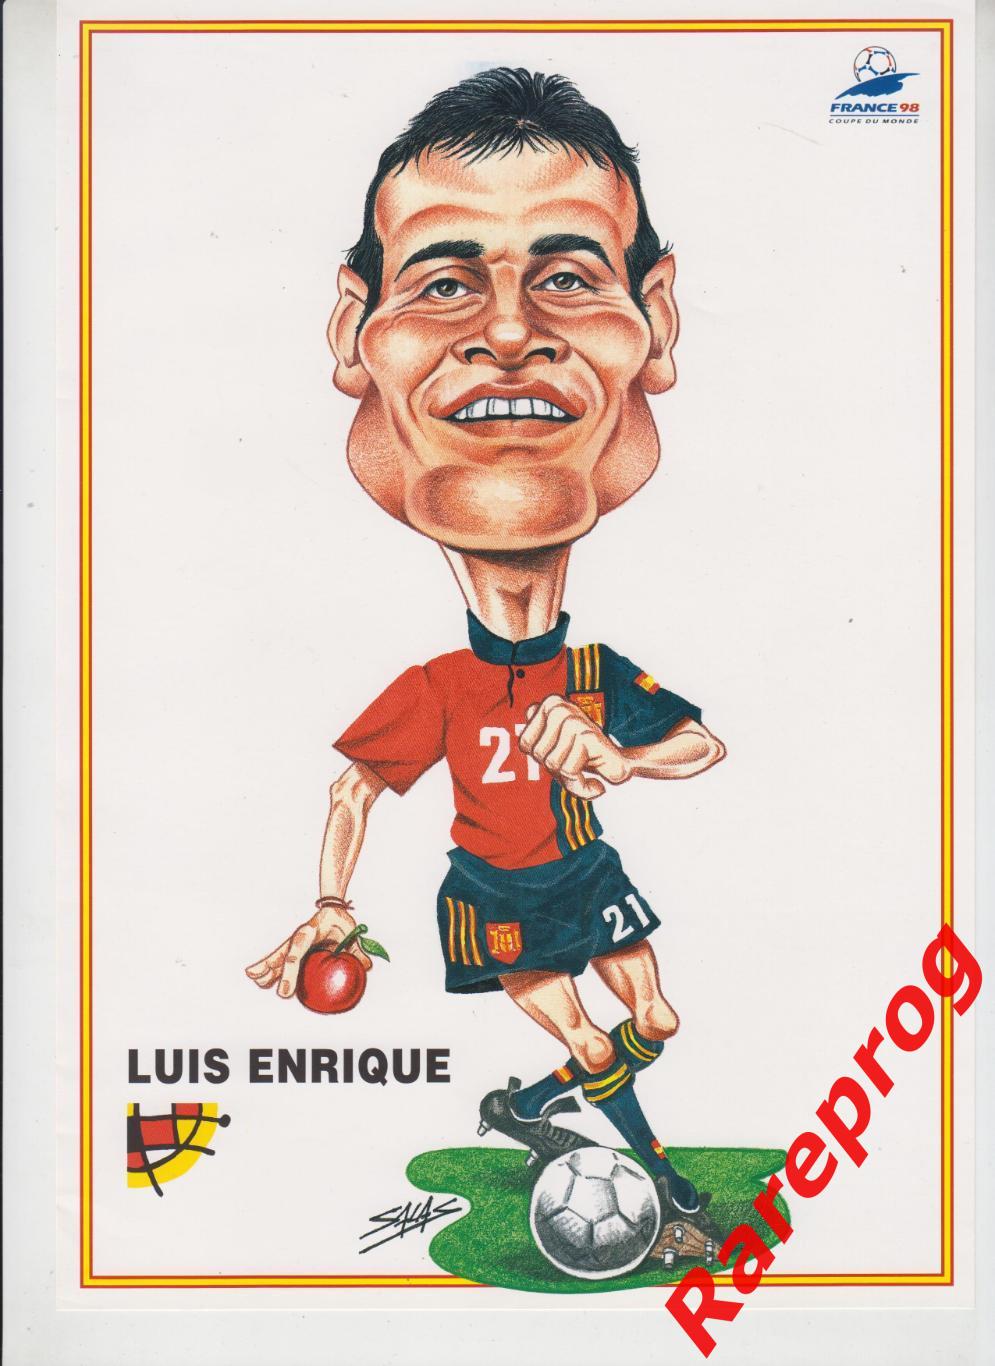 журнал Футбол RFEF Испания № 11 - февраль 1998 + постер 1